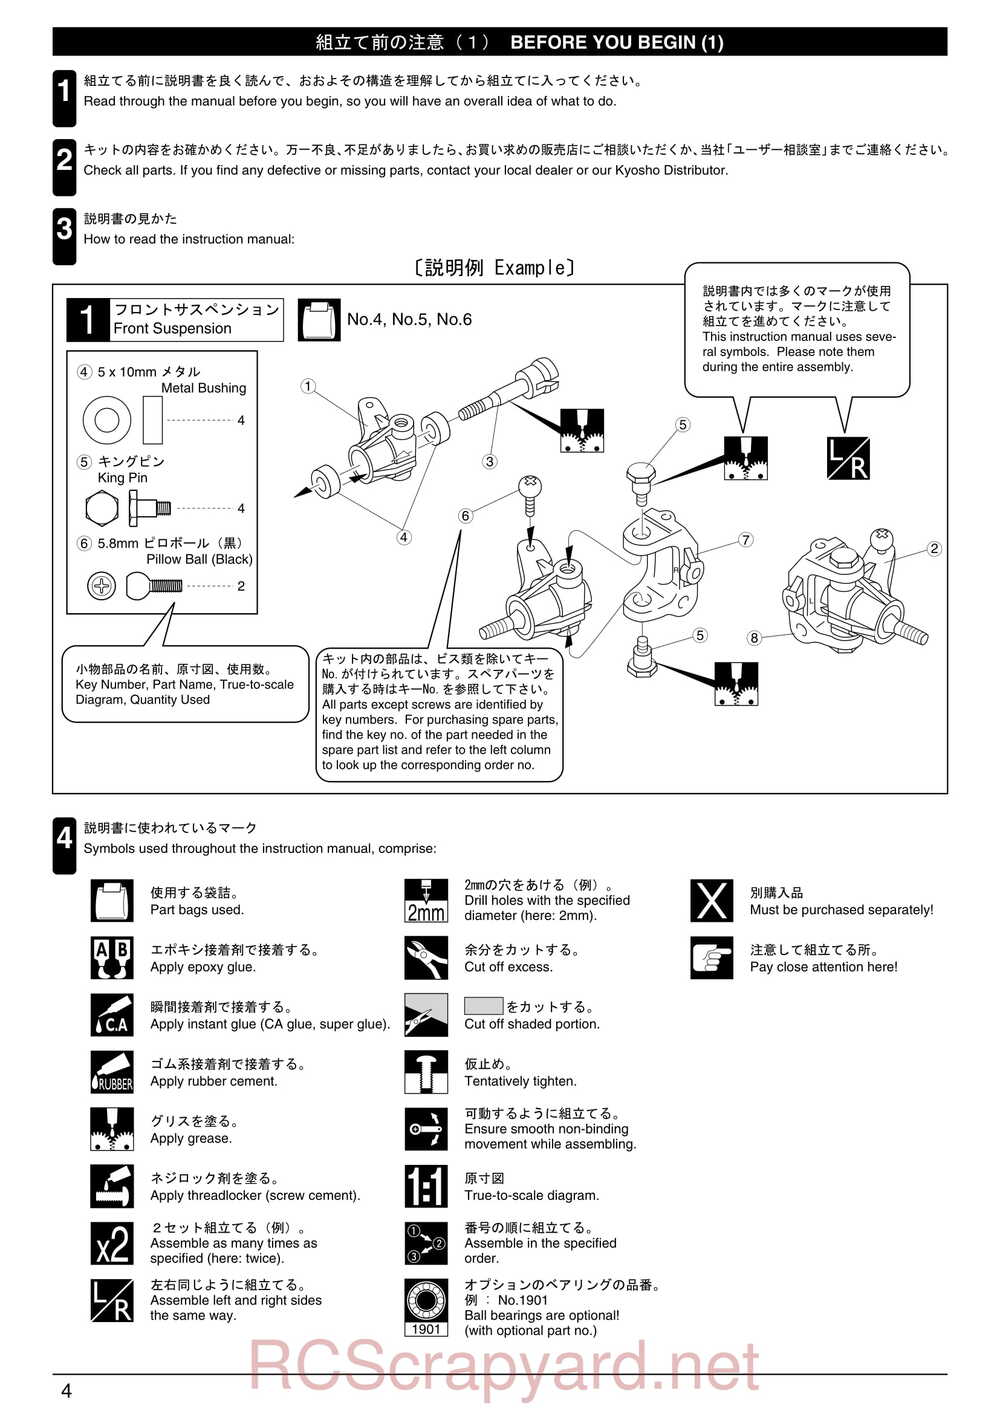 Kyosho - 31271 - Inferno-MP-7-5-Yuichi 2 - Manual - Page 04